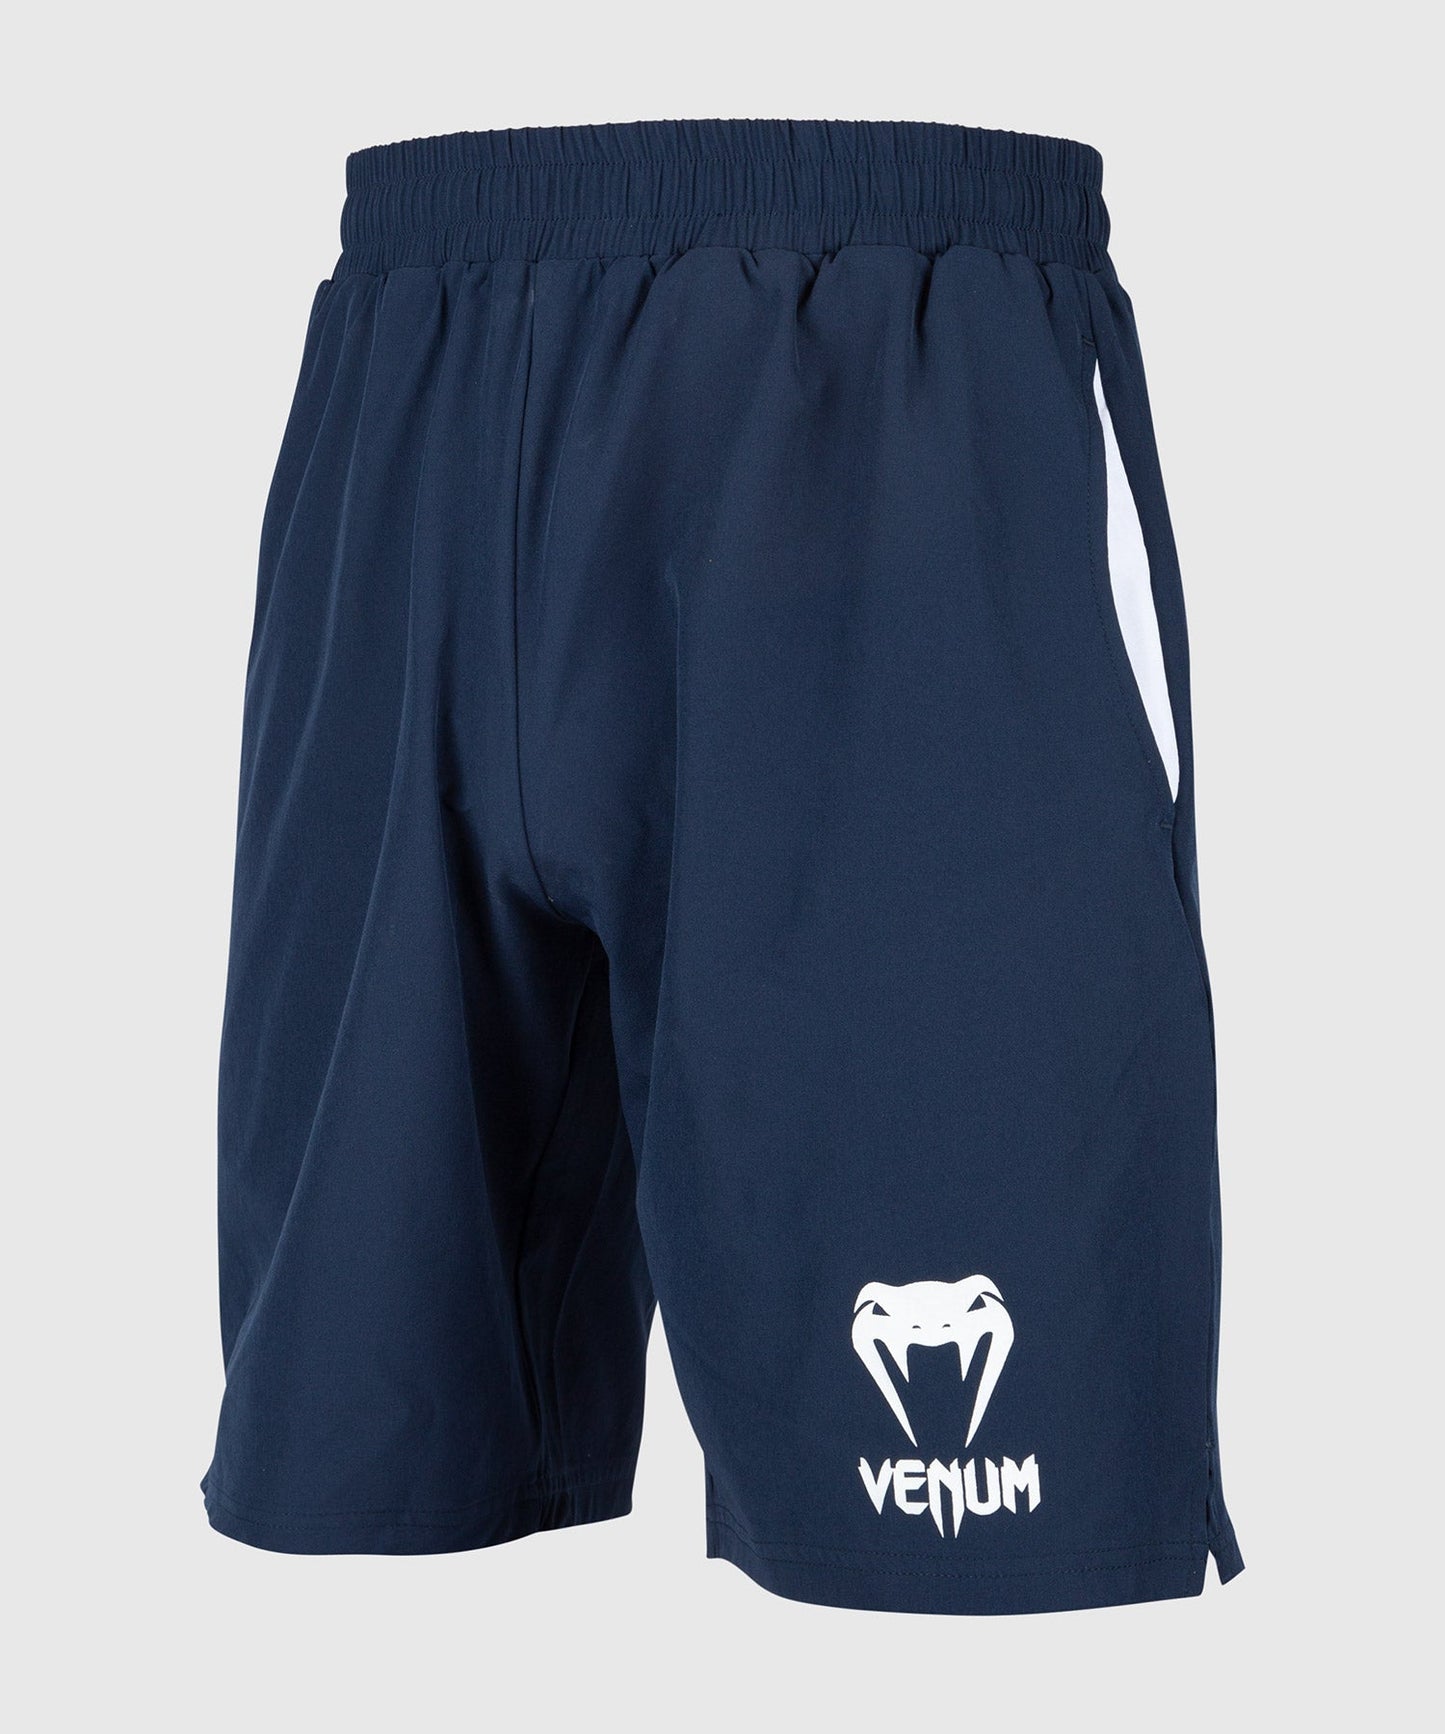 Venum Classic Training Shorts - Navy blue